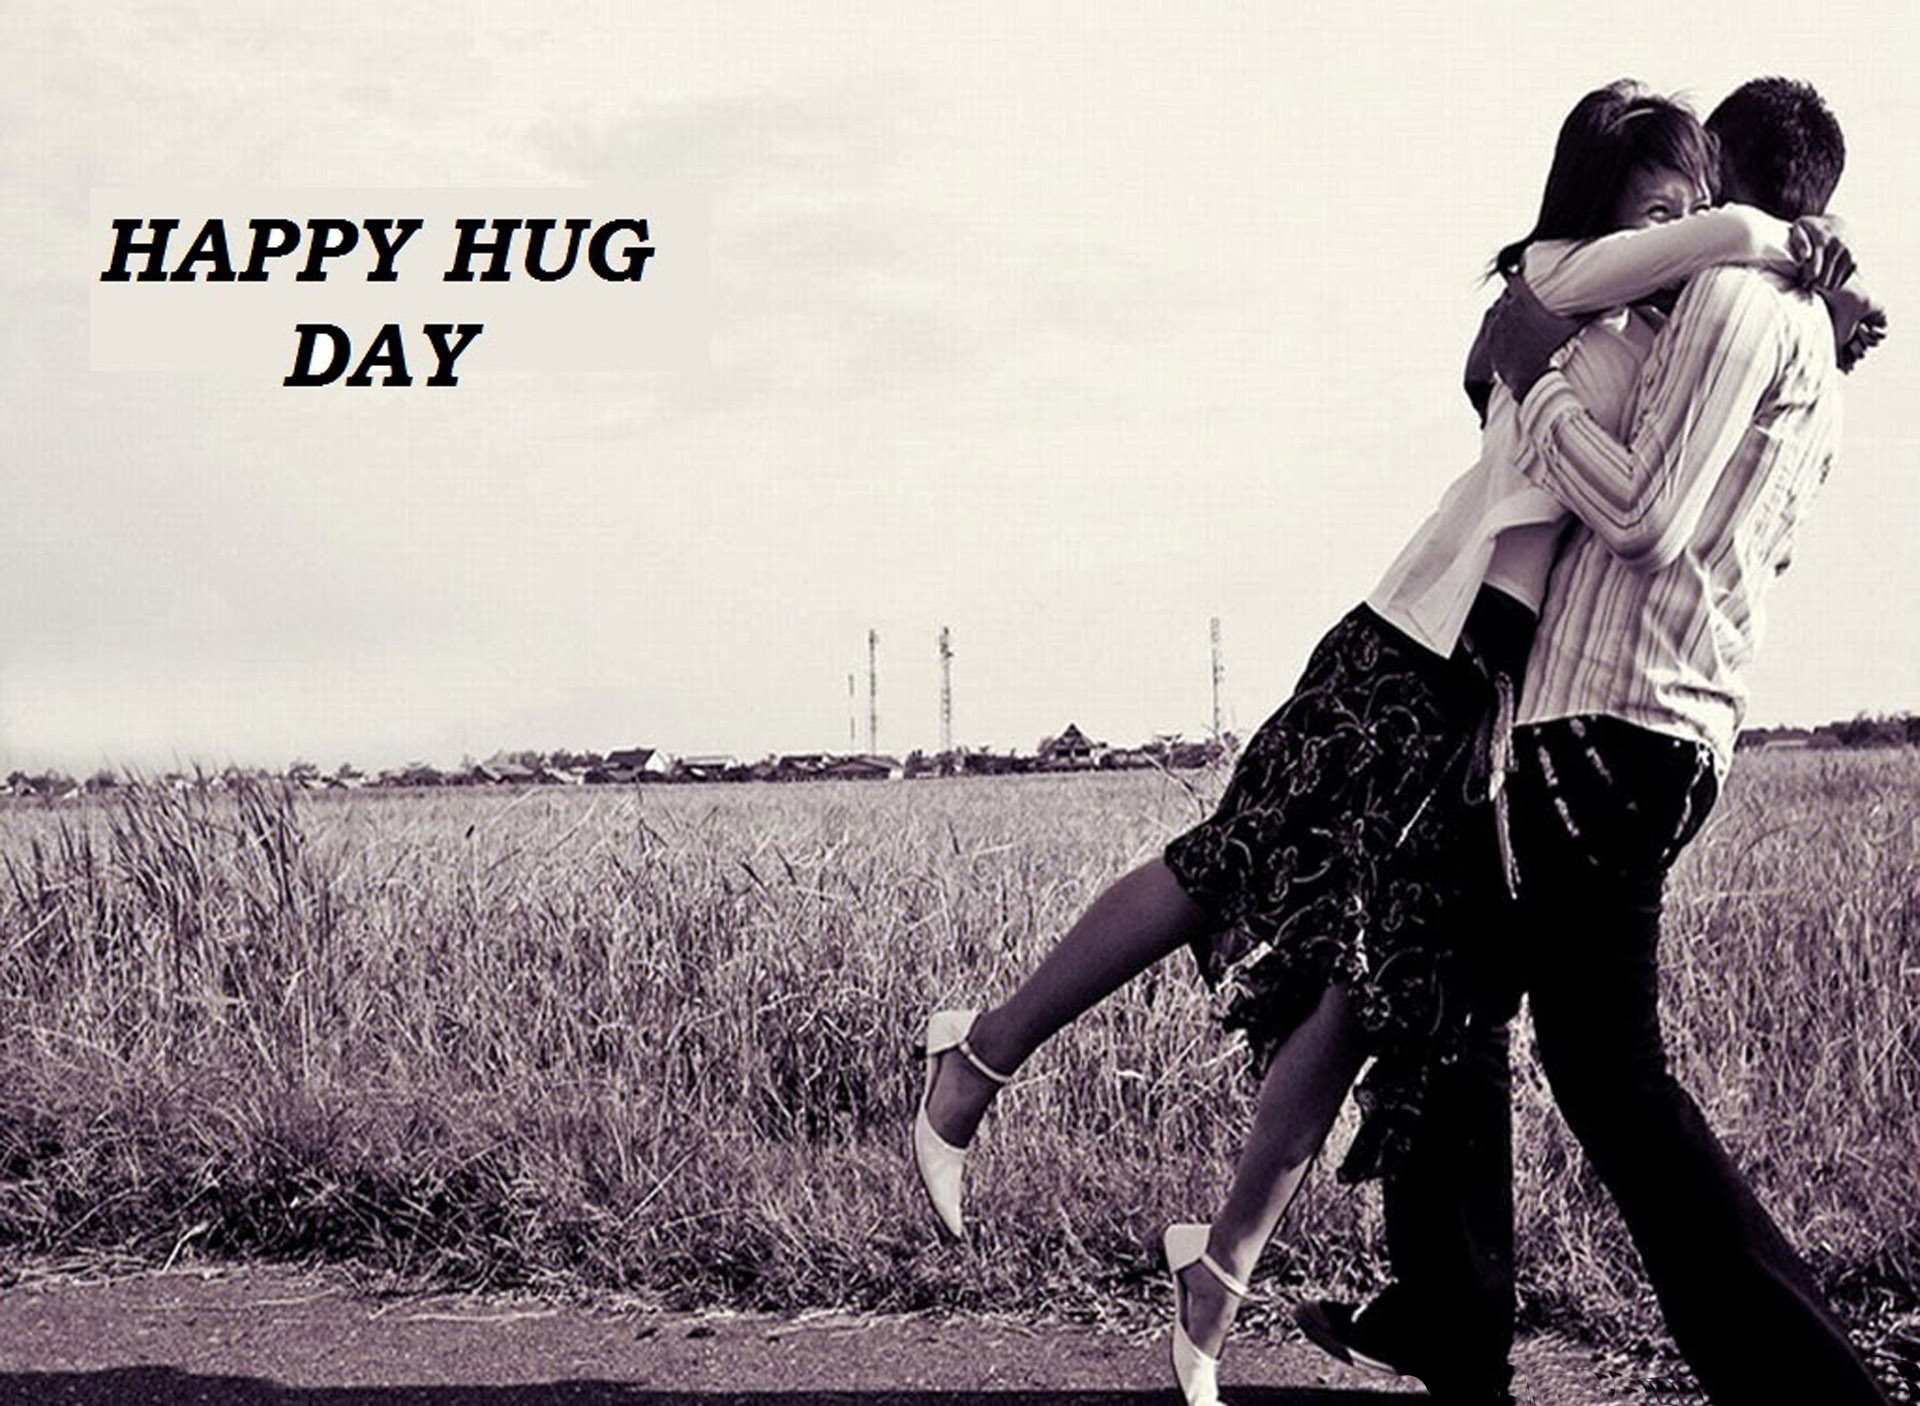 happy hug day images hd